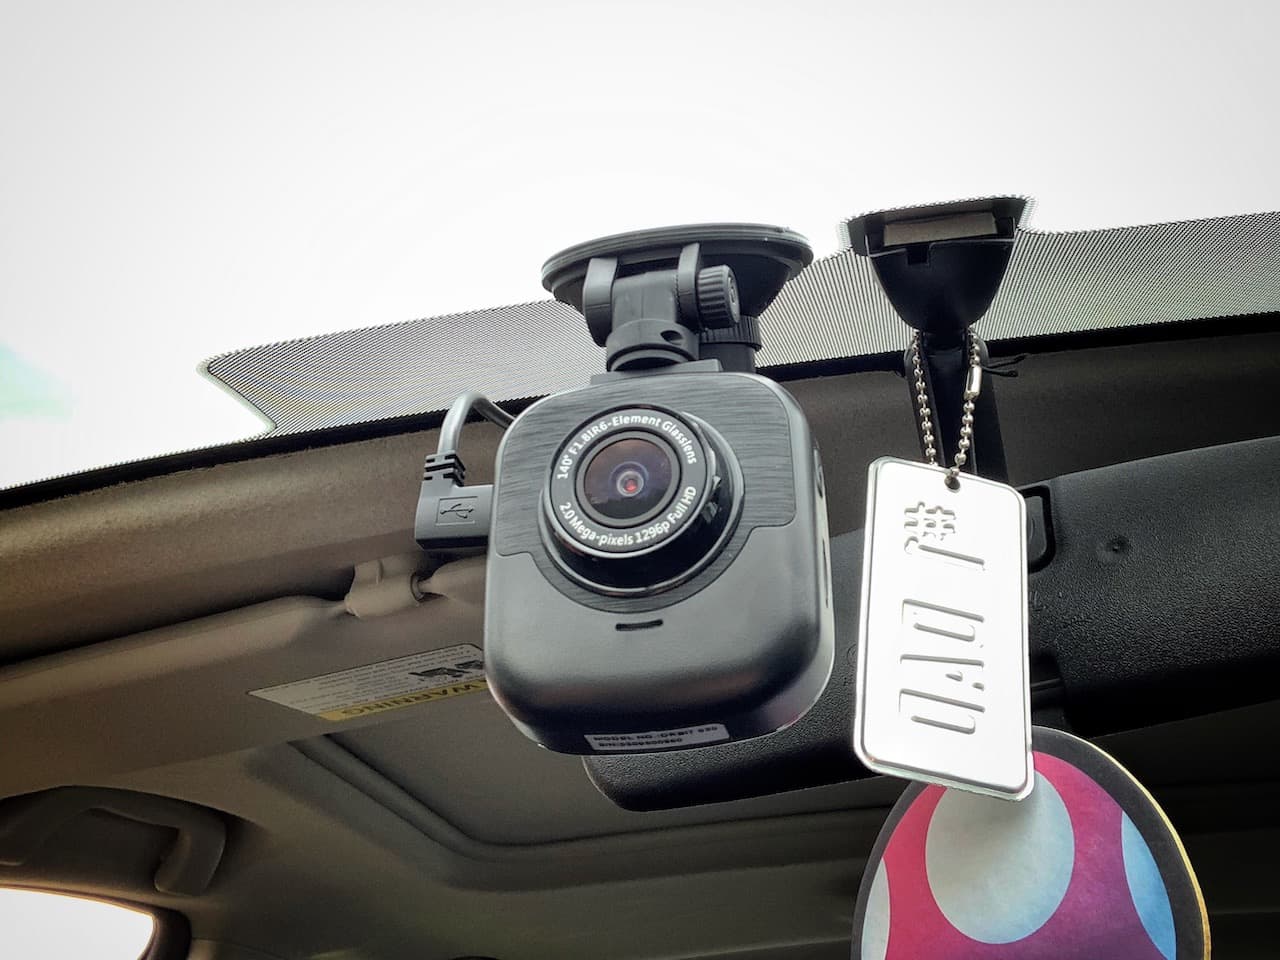  myGEKOgear Orbit 530 24/7 Dash Cam for Cars with OBD 2